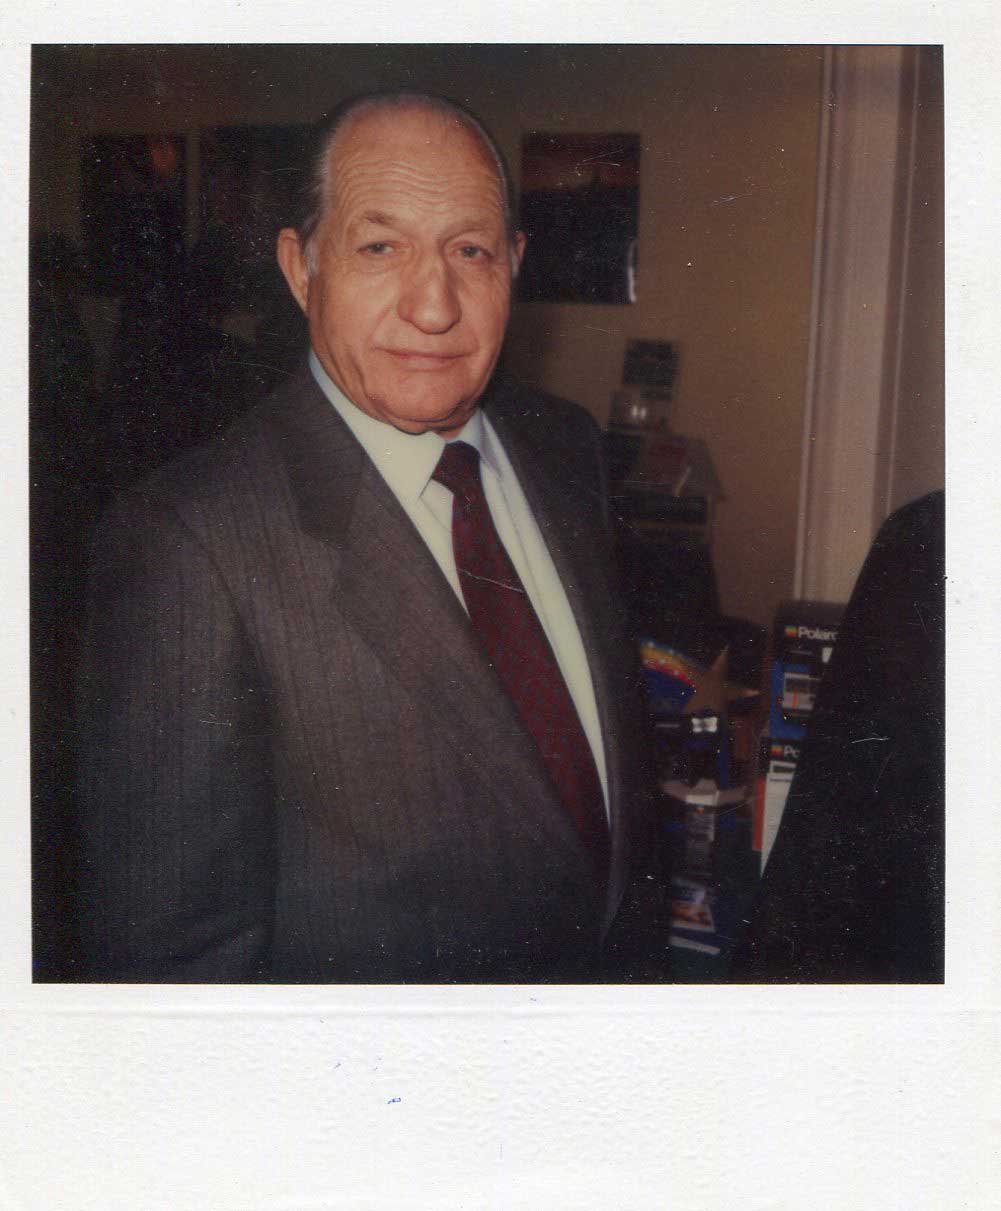 Grandfather-Gino-late 80s-polaroid-family-archive-